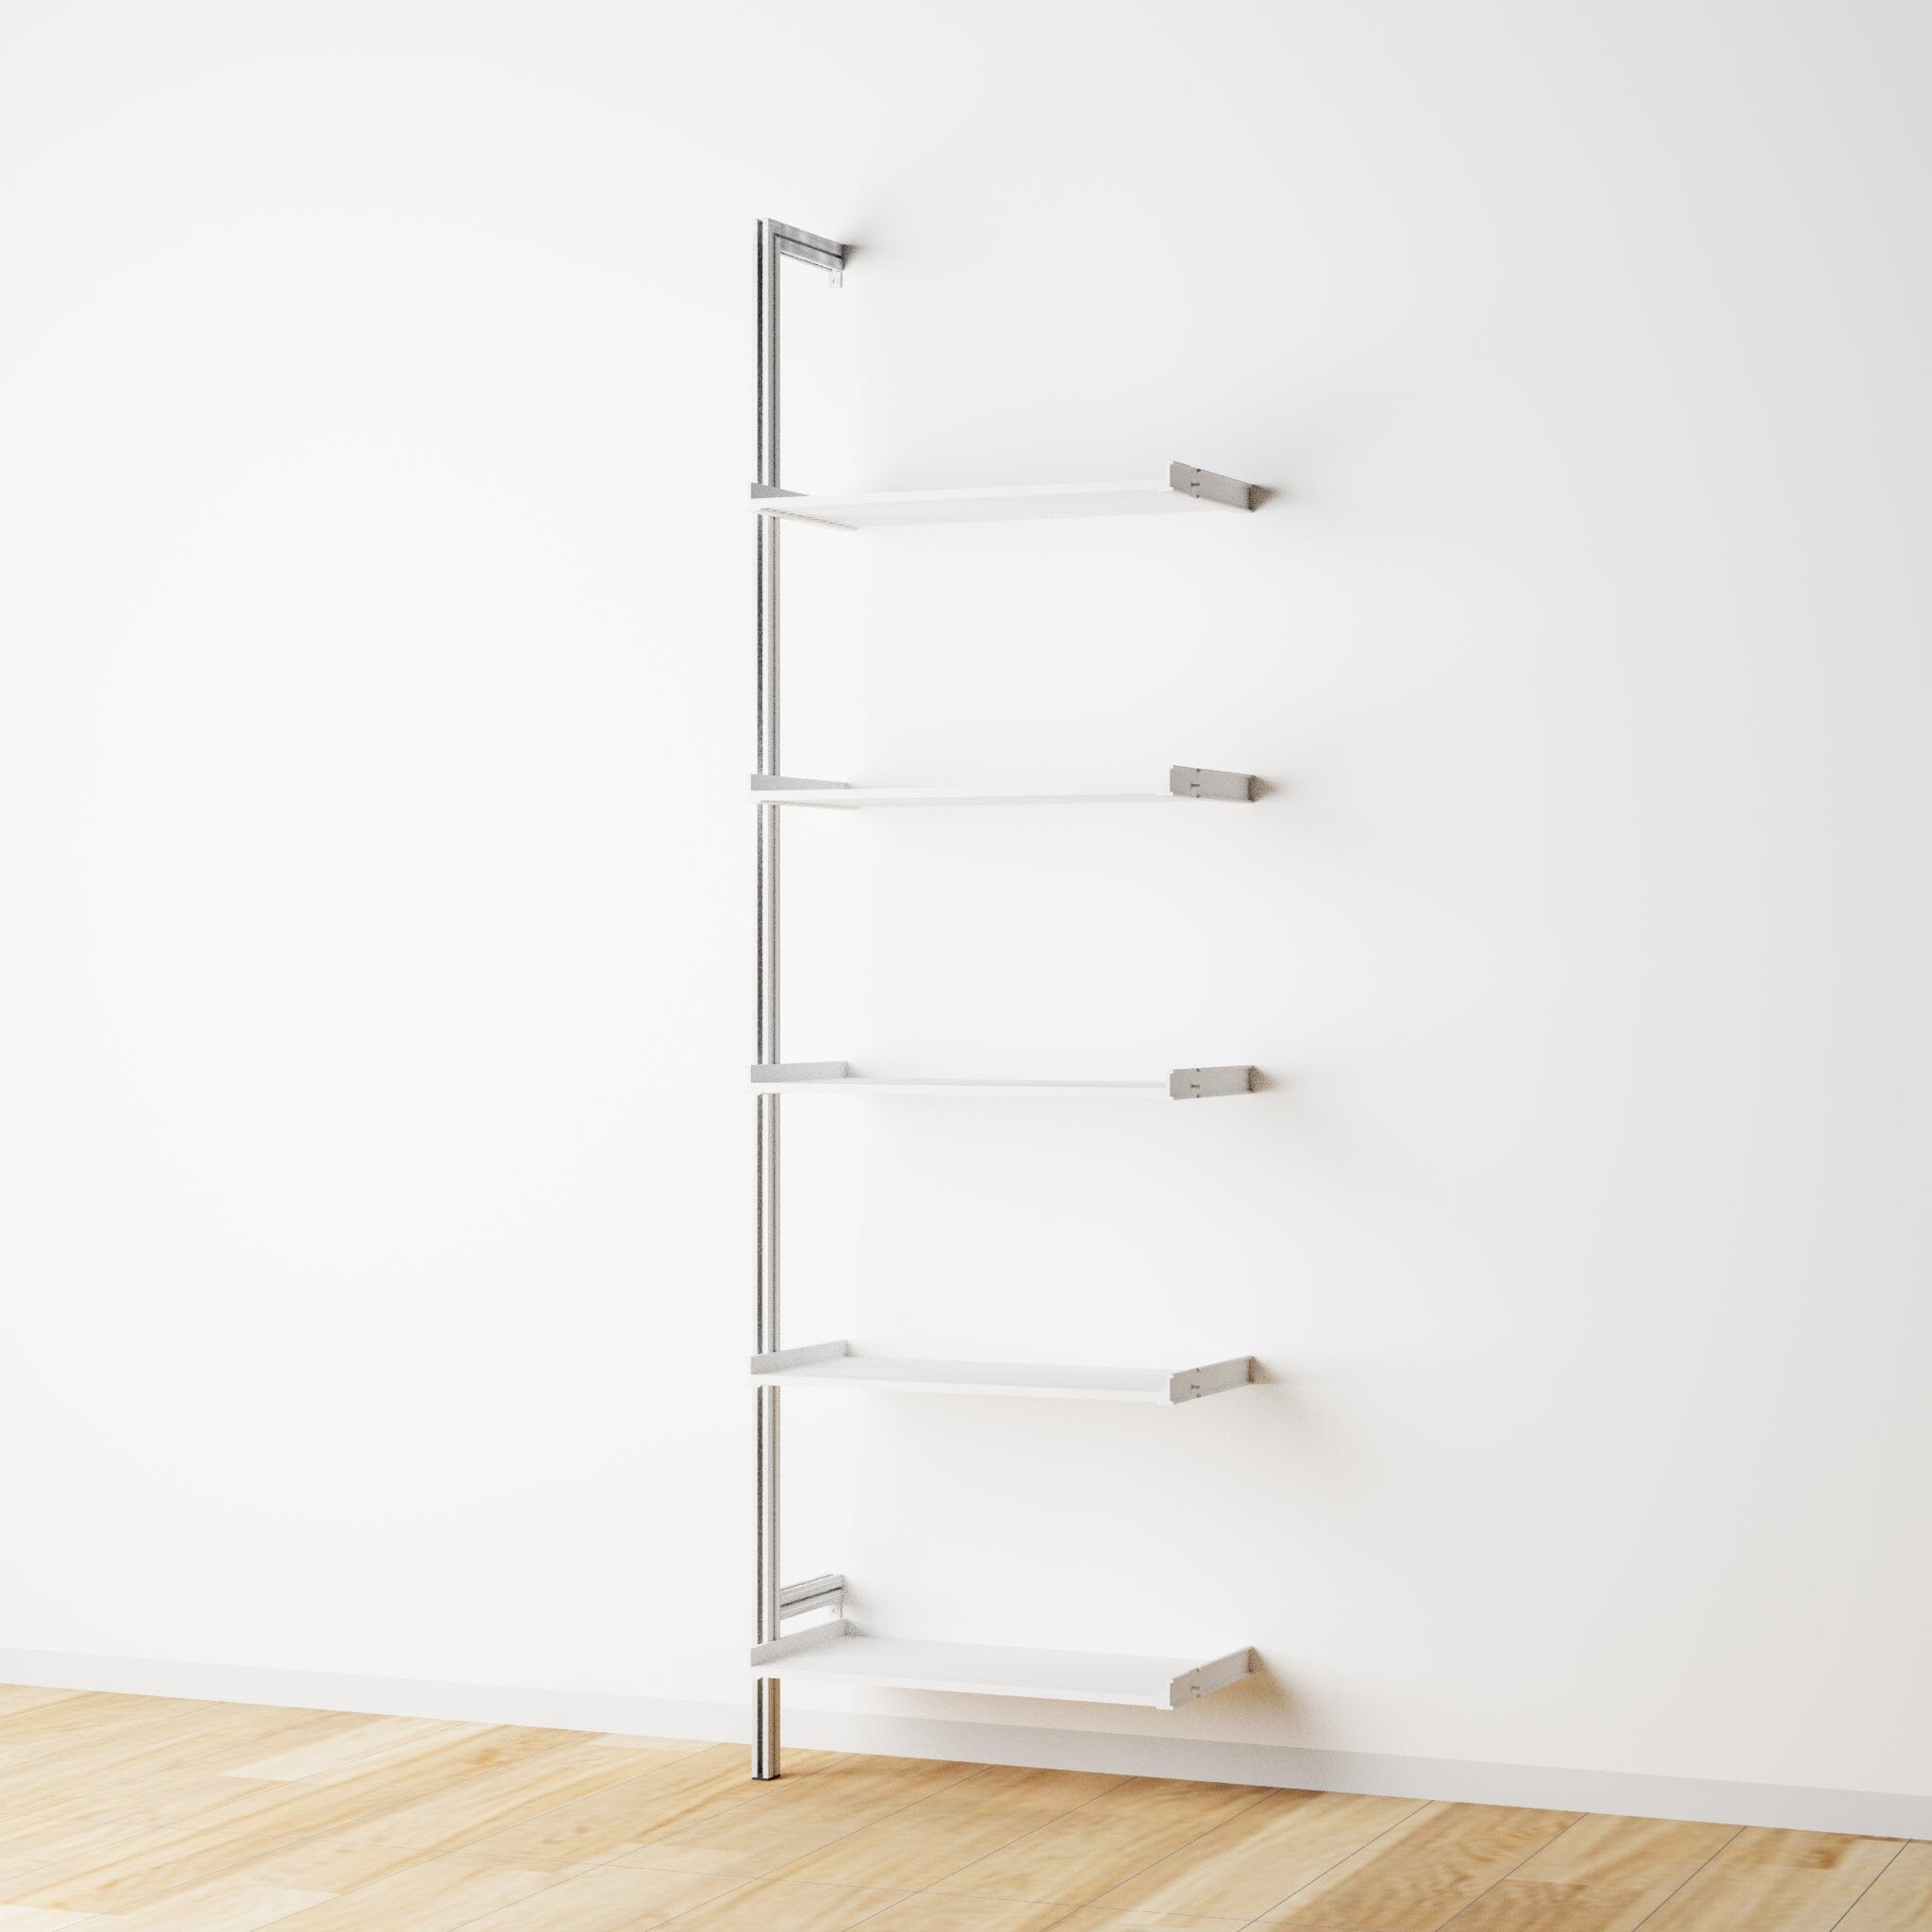 Modular Shelving Units - Aluminum Shelves